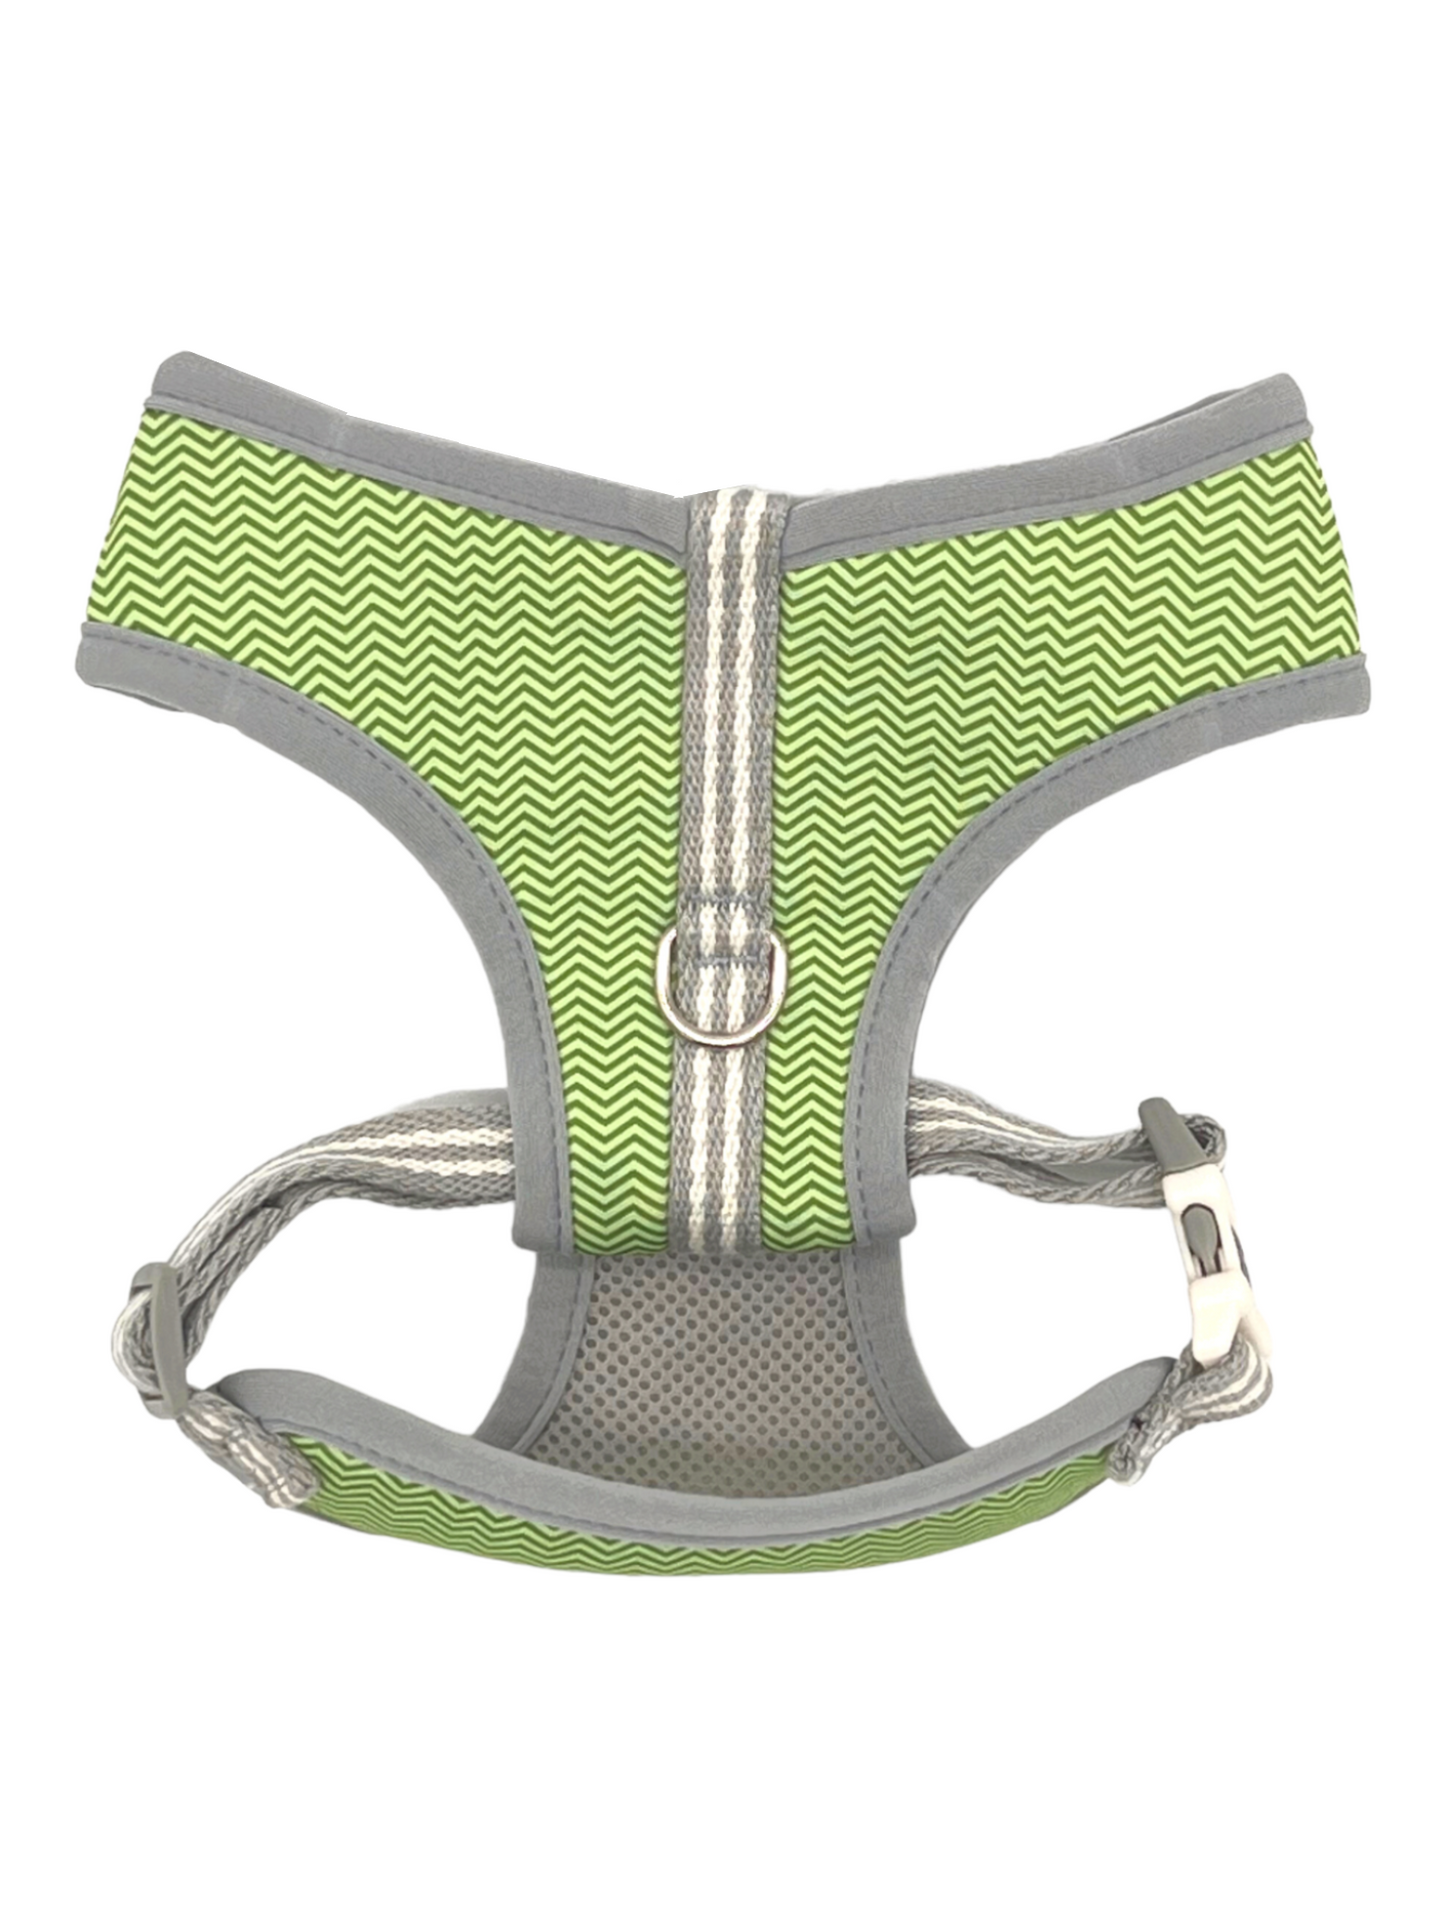 Lime Chevron Stripe Designer Dog Harness